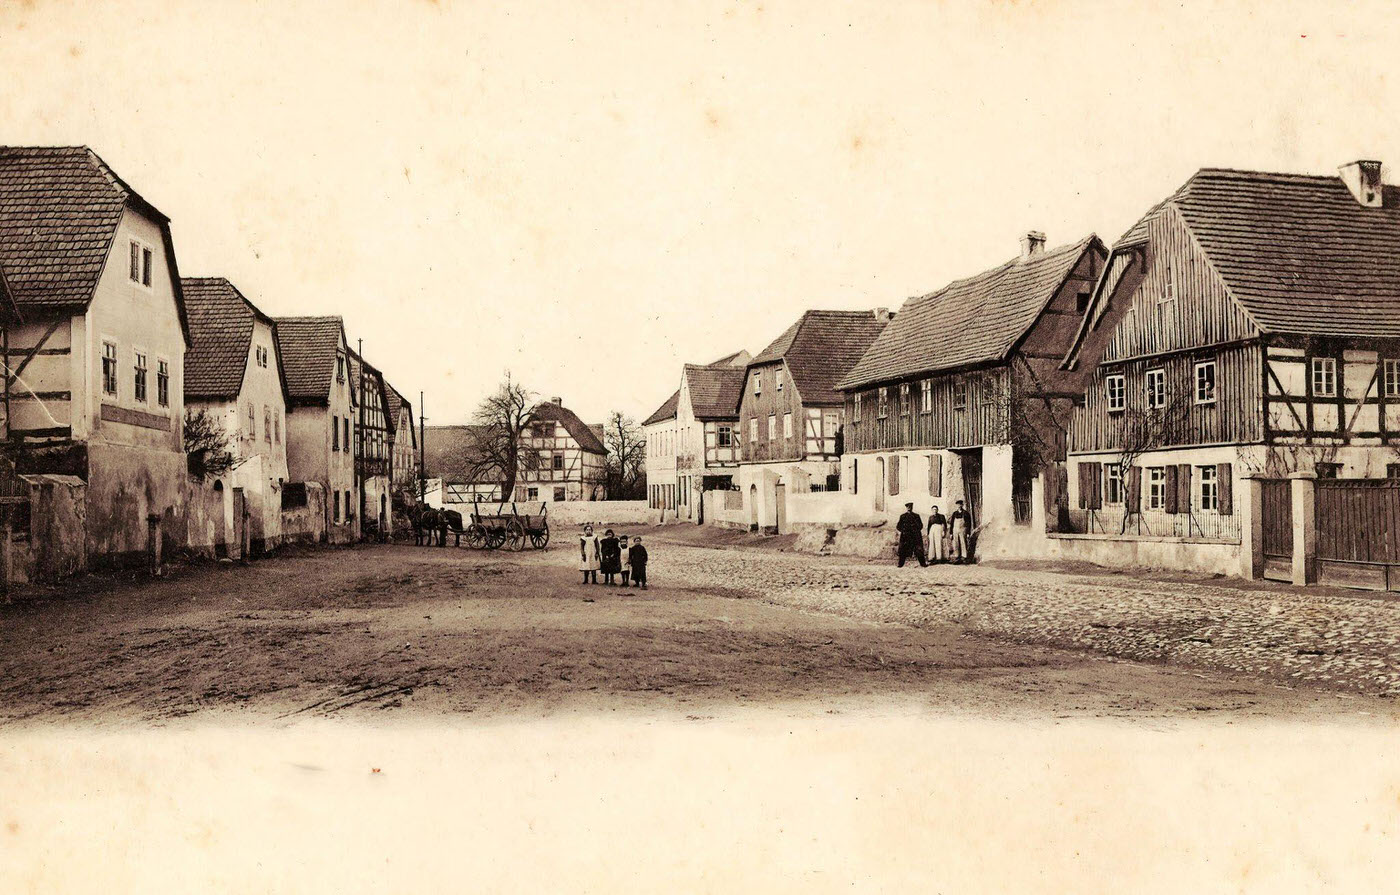 Horse-drawn wagons in Germany, Buildings in Radeburg, Landkreis Meissen, Radeburg, Grossenhainer Platz, 1901.